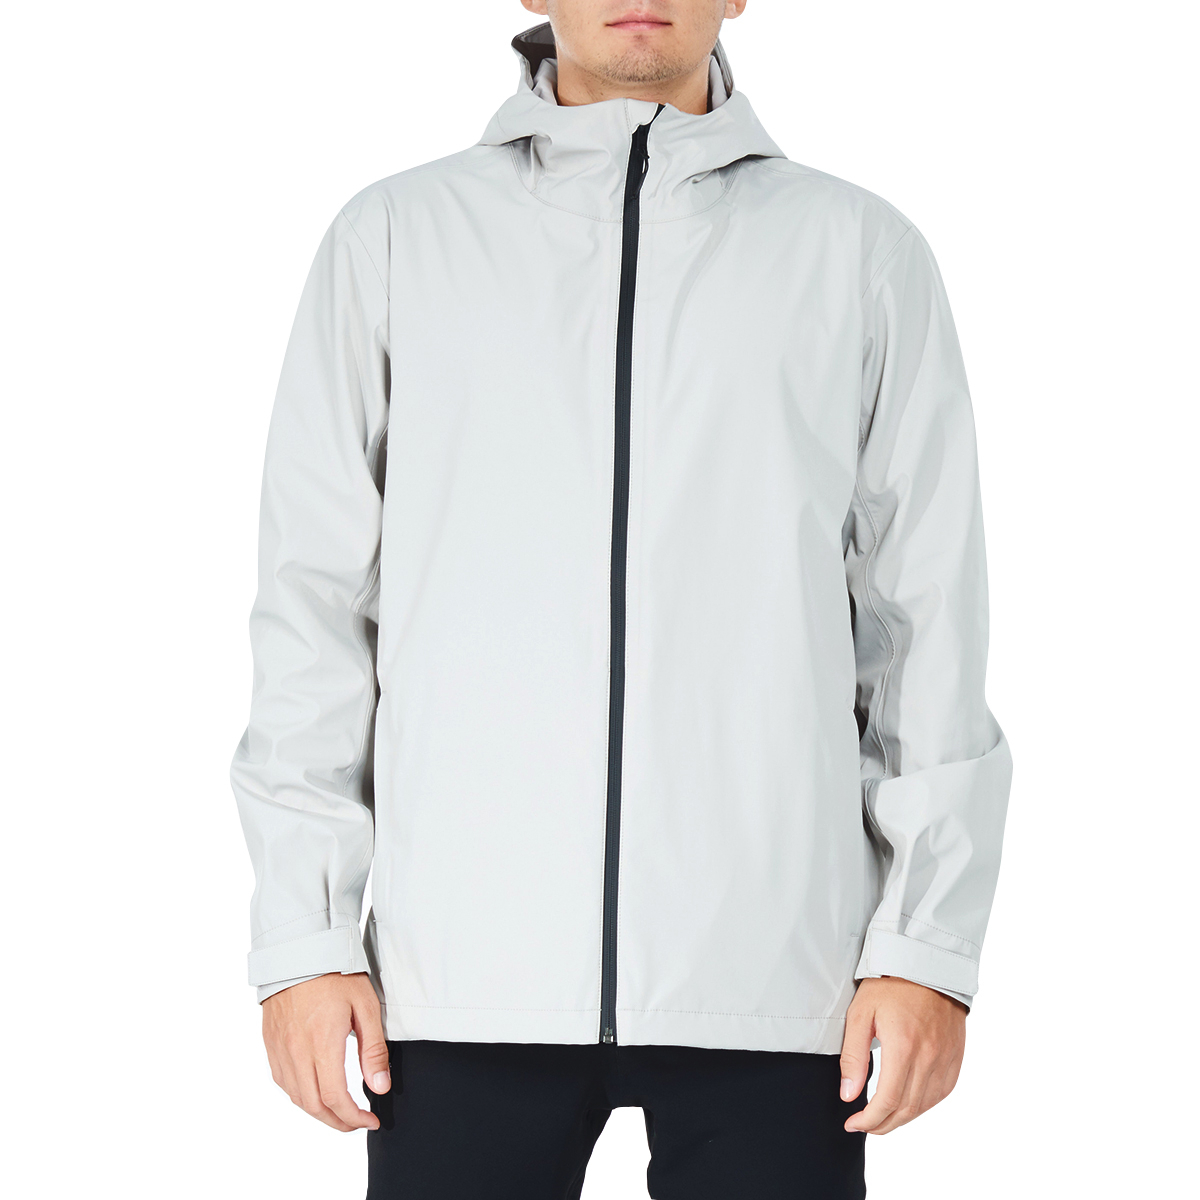 Gymax Men's Windproof Rain Jacket Hooded Coat Black/ Grey/ Navy - Grey, M